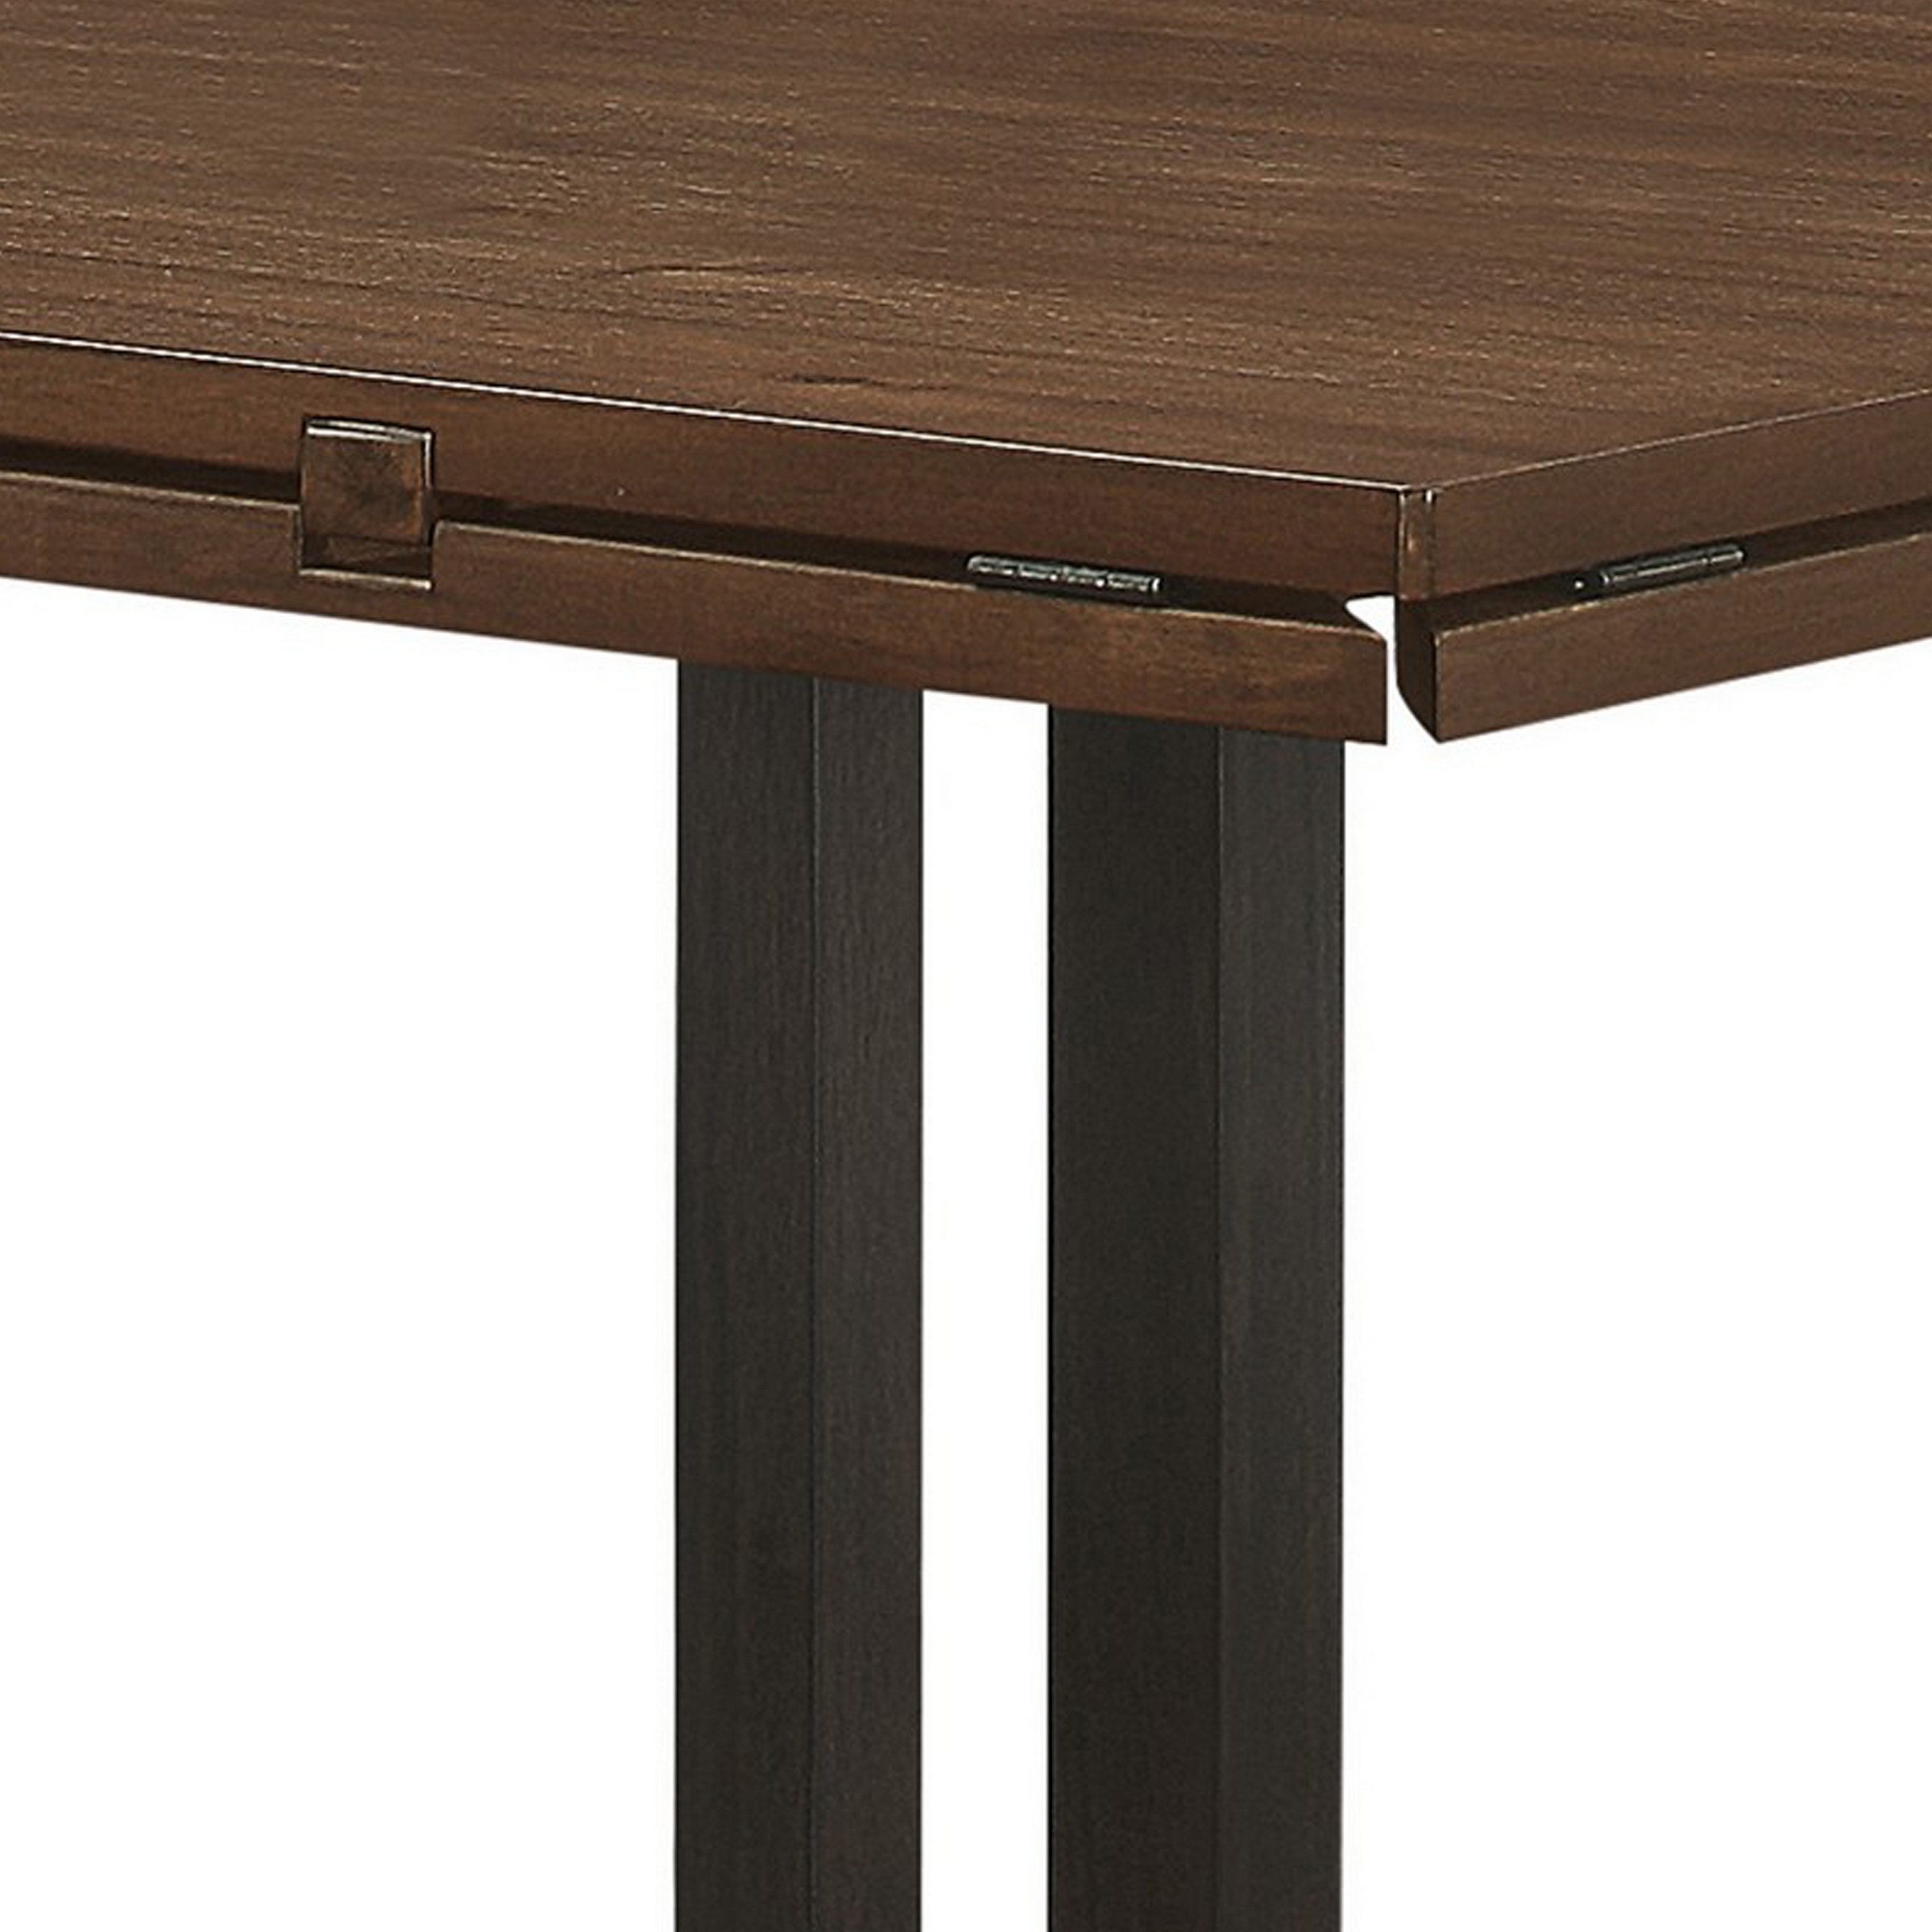 52-60 Inch Counter Height Dining Table, Storage, 2 Tone Espresso Brown- Saltoro Sherpi